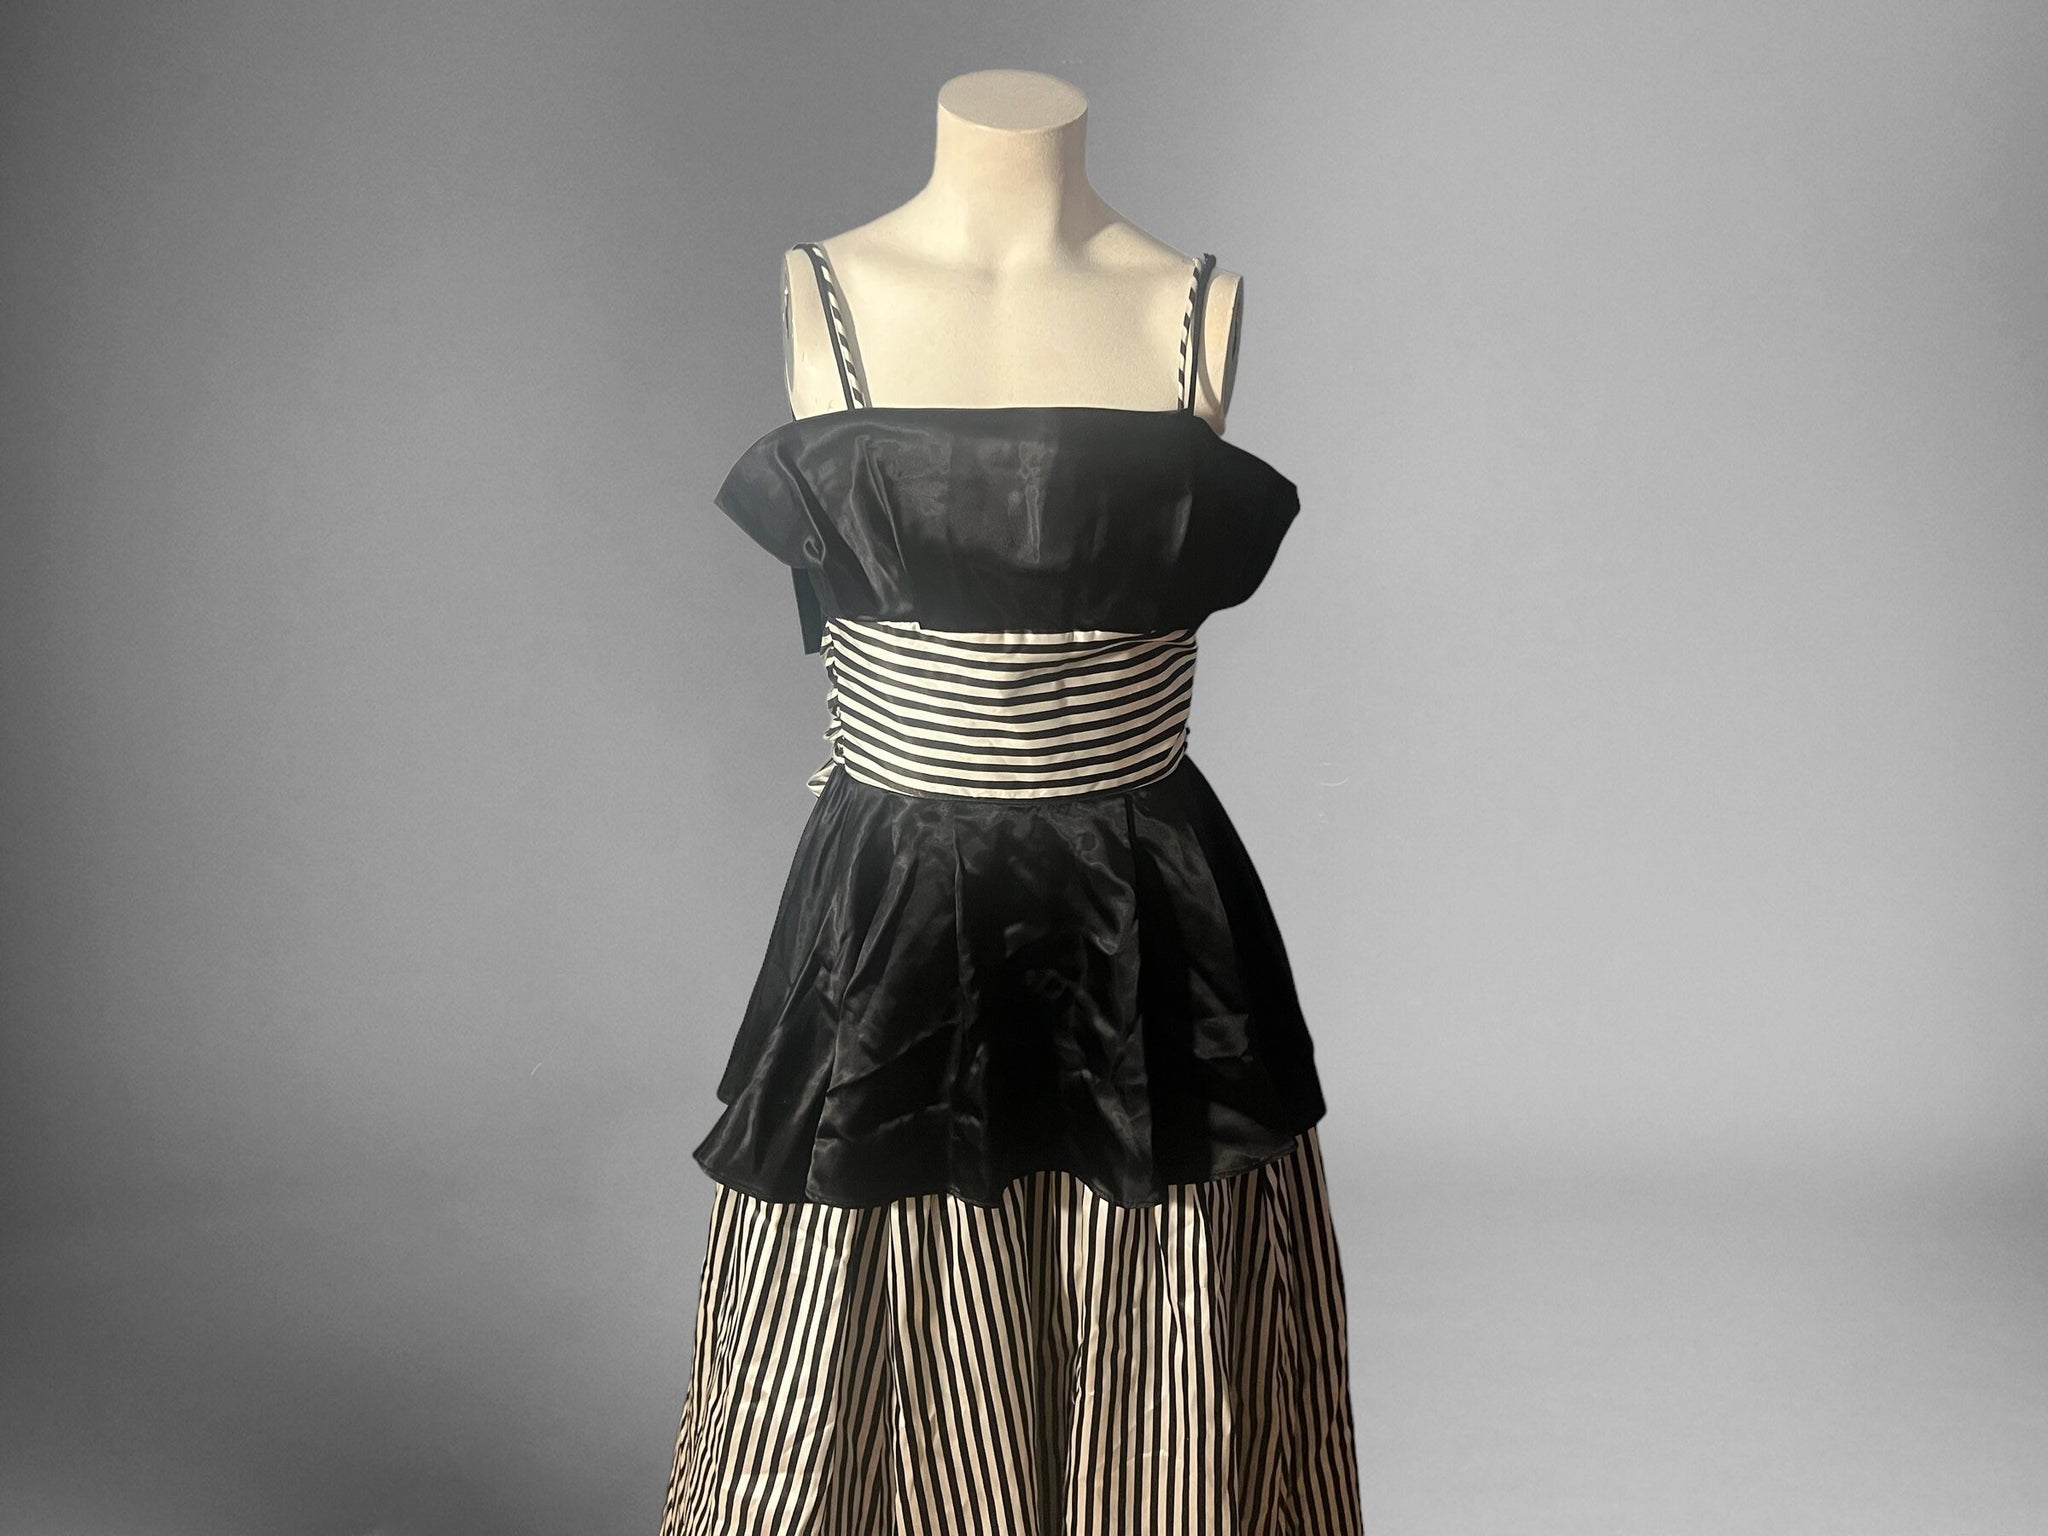 Vintage 80's Gunne Sax striped prom dress sz 3 xs